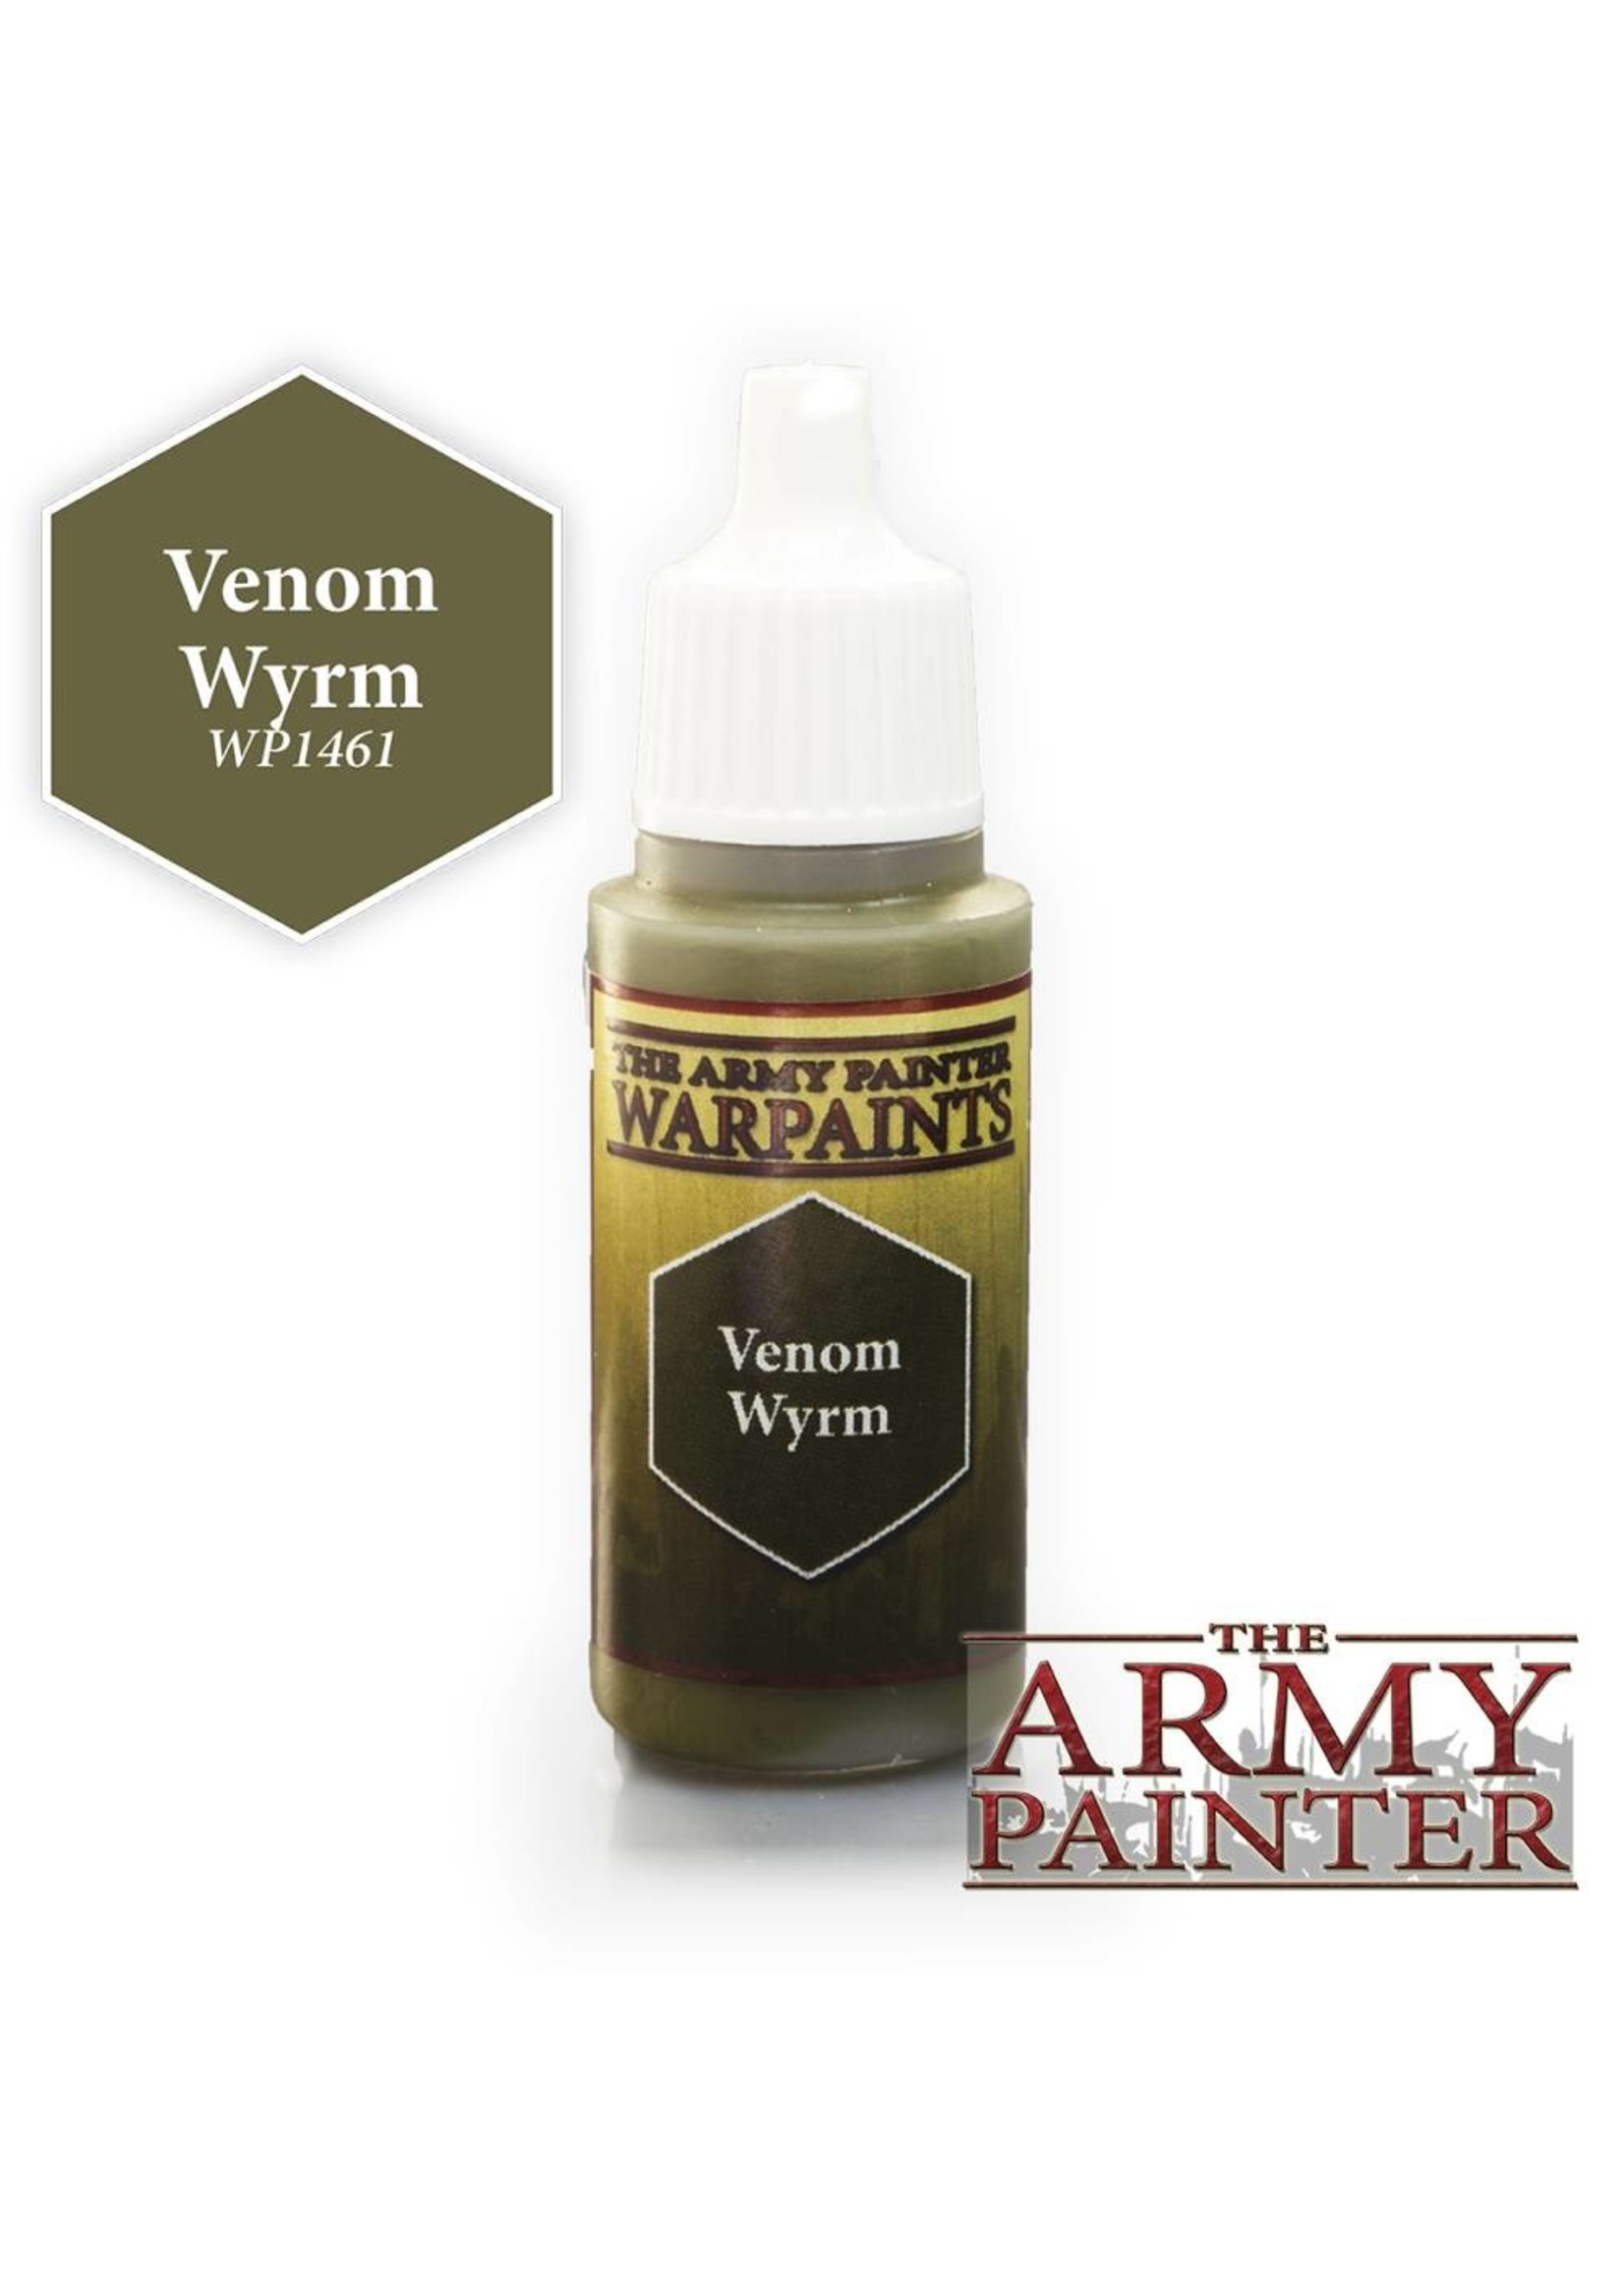 The Army Painter Acrylics Warpaints Venom Wyrm